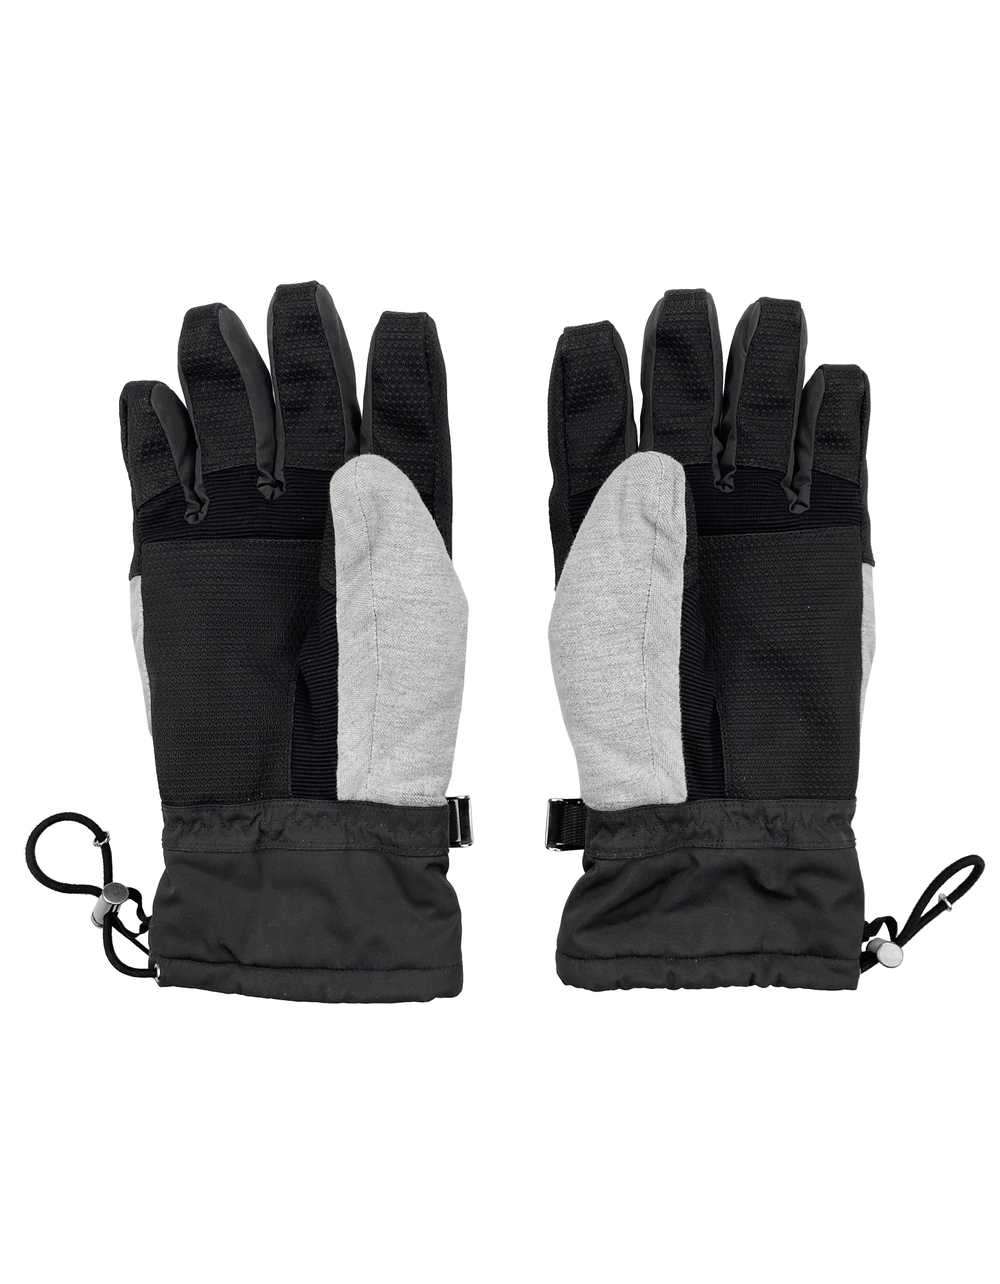 Prada Prada Sport Nylon Padded Gloves - image 2